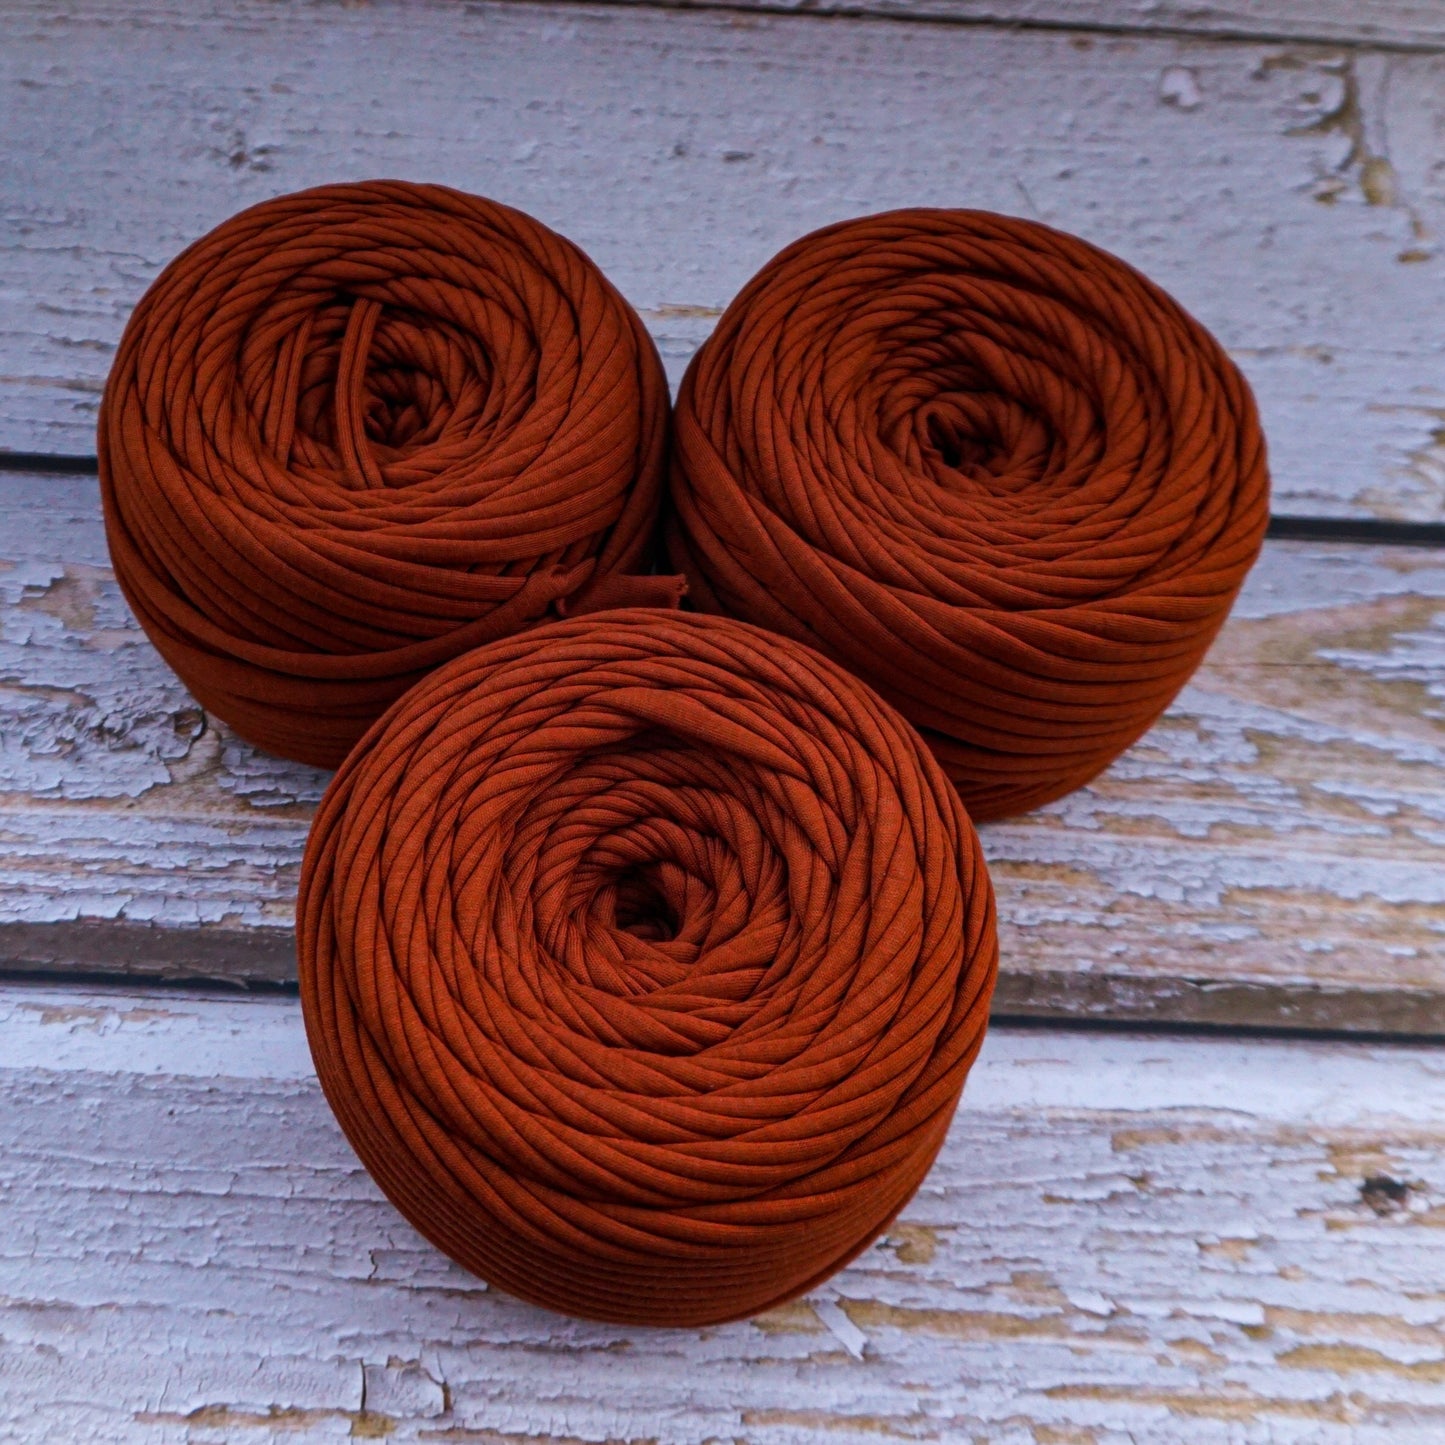 T-shirt yarn for crocheting baskets, bags, rugs and home decor. Dark burnt orange